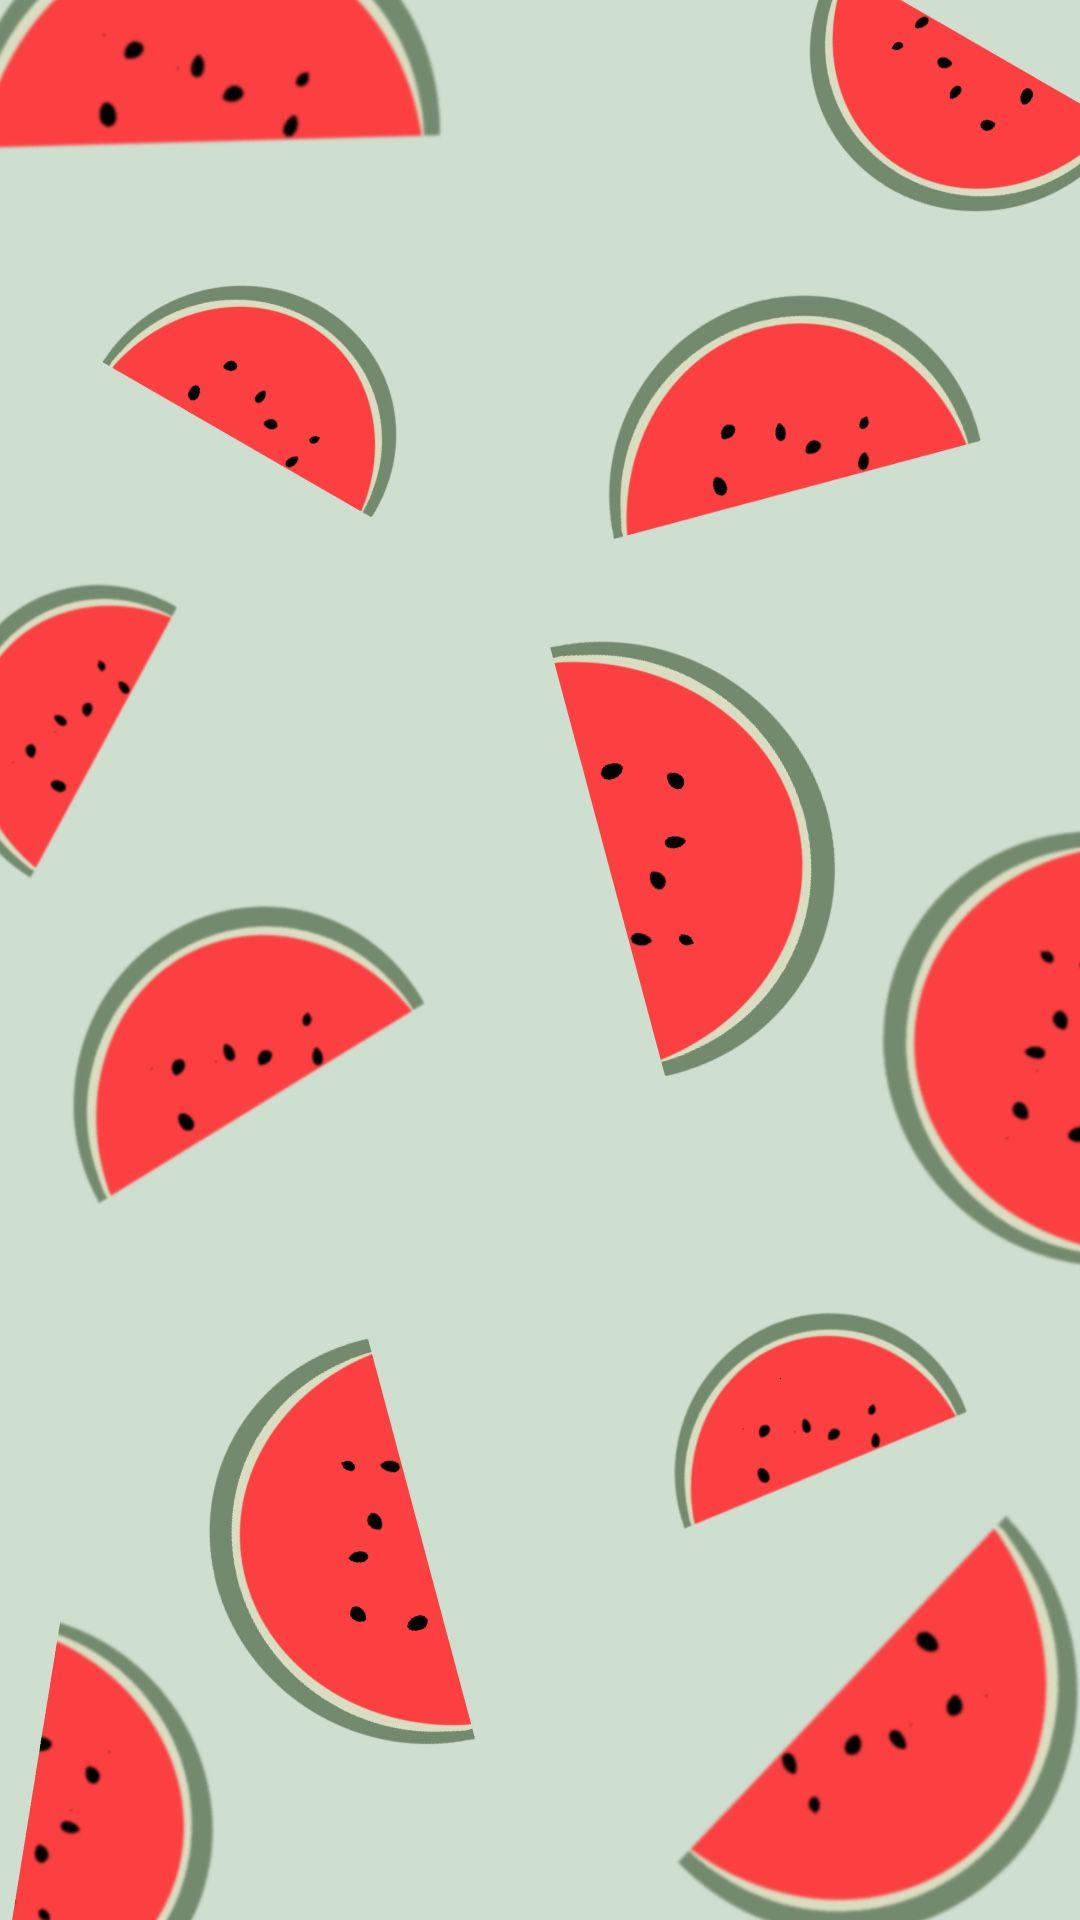 Watermelon Wallpaper. Watermelon wallpaper, Phone wallpaper patterns, Pretty wallpaper iphone